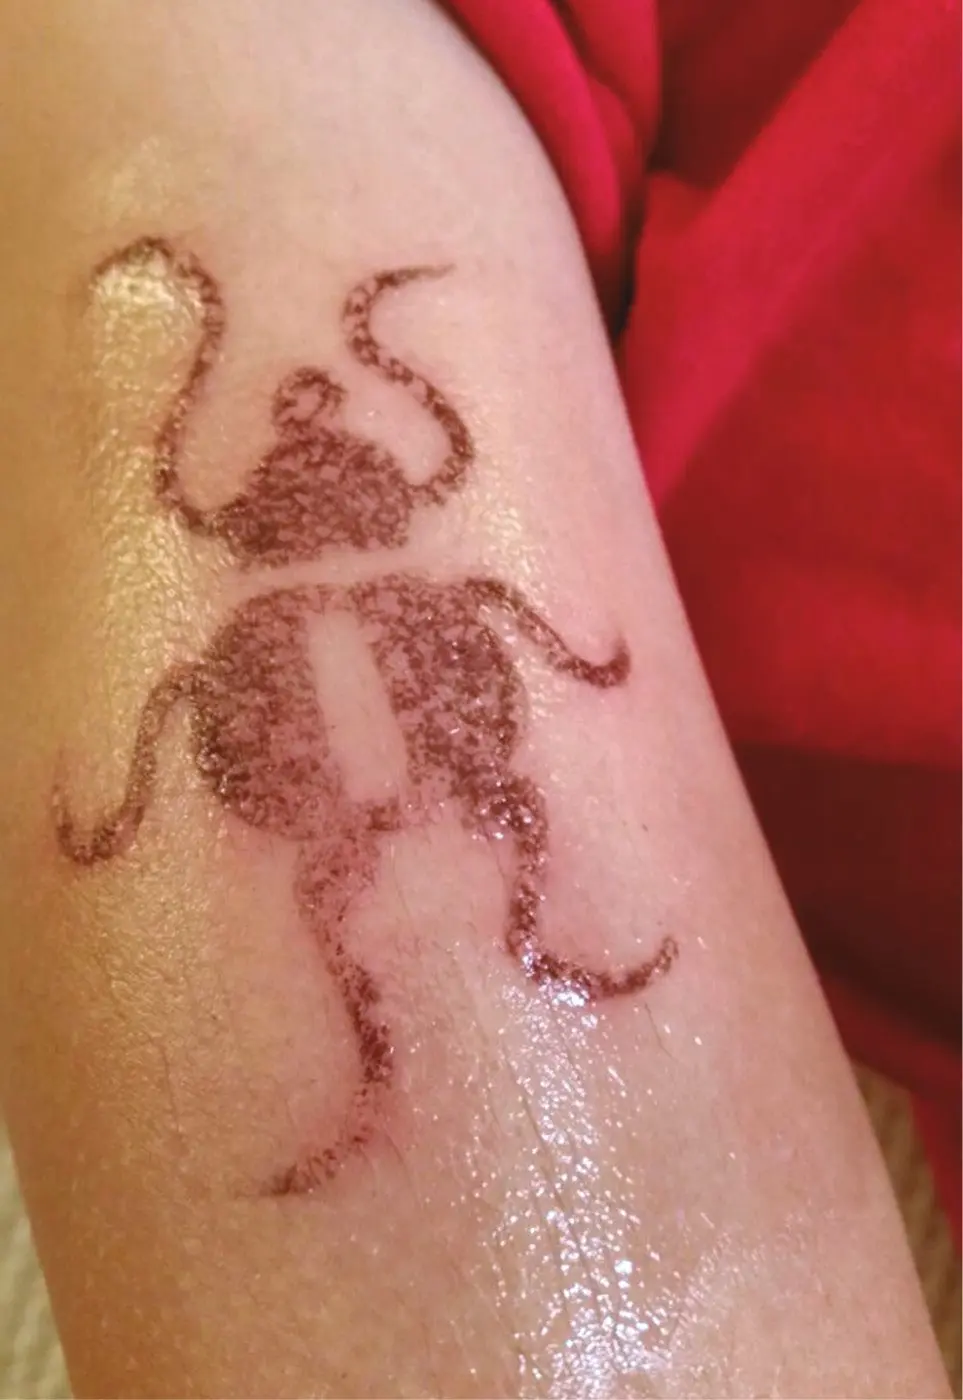 Figura 3. Dermatitis de contacto por tatuaje temporal (“henna negra”)